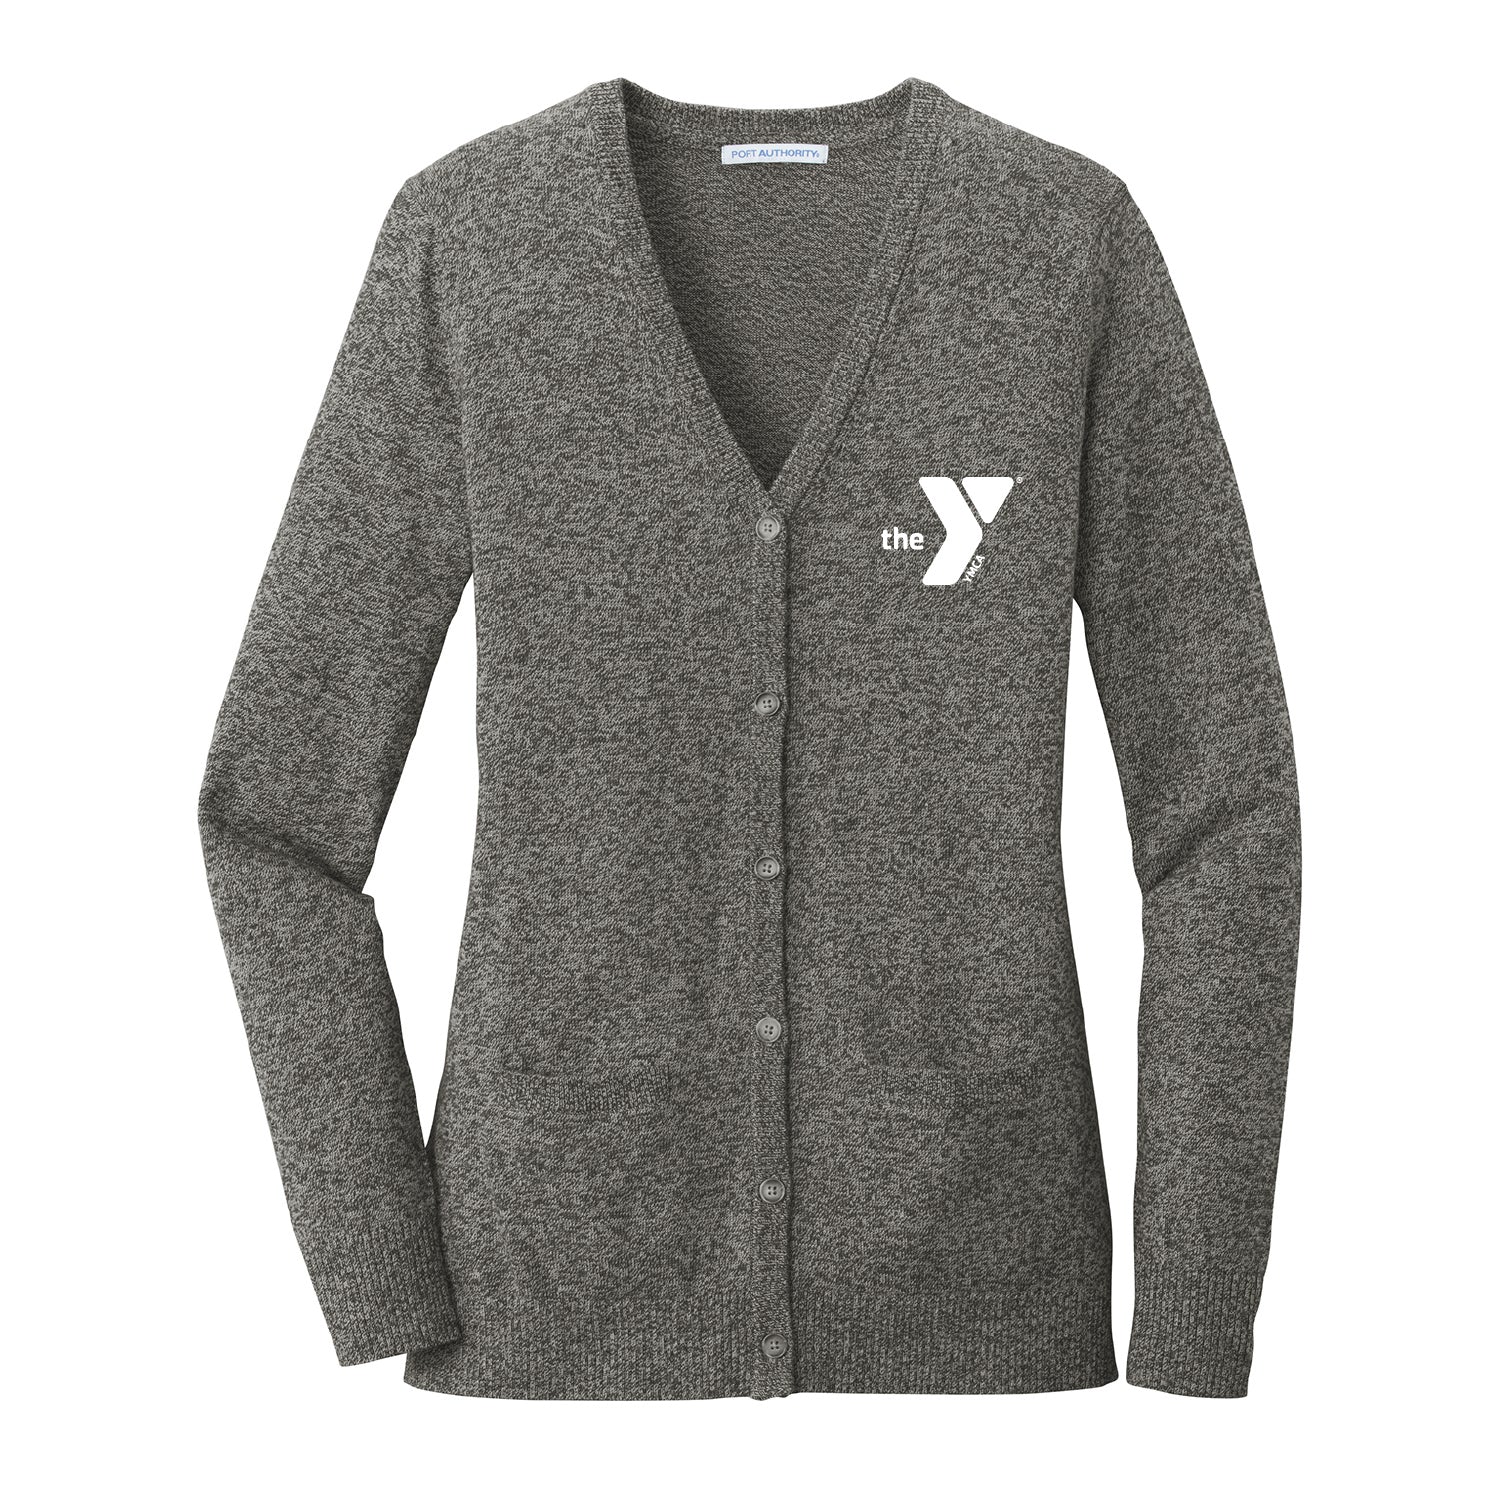 YMCA Ladies Marled Cardigan Sweater - DSP On Demand